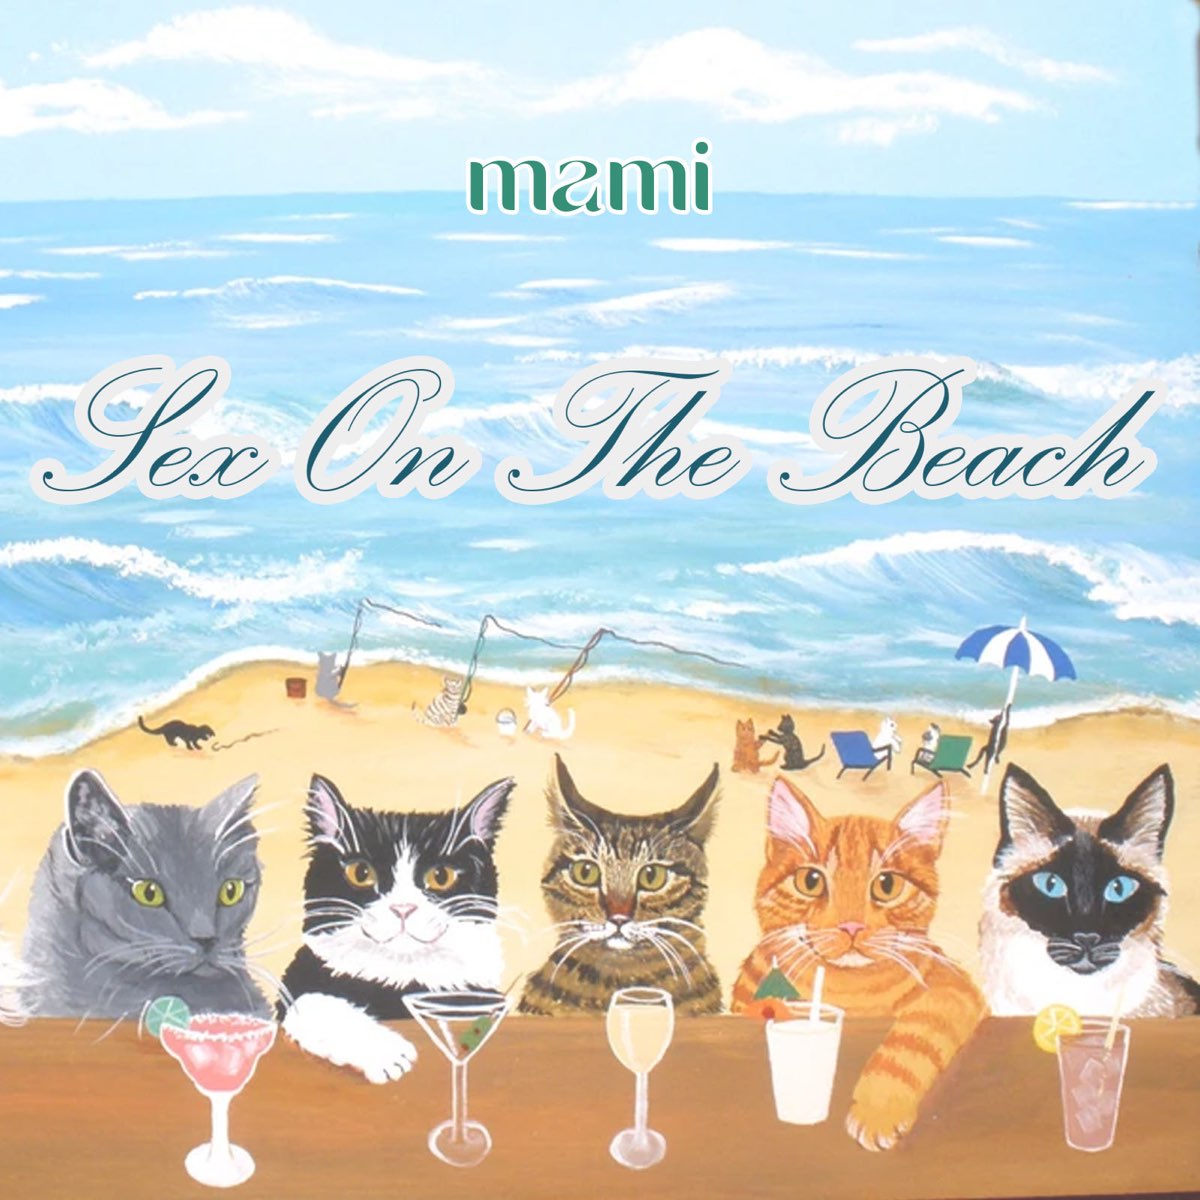 Sex on the Beach - Single - Album by Mami - Apple Music